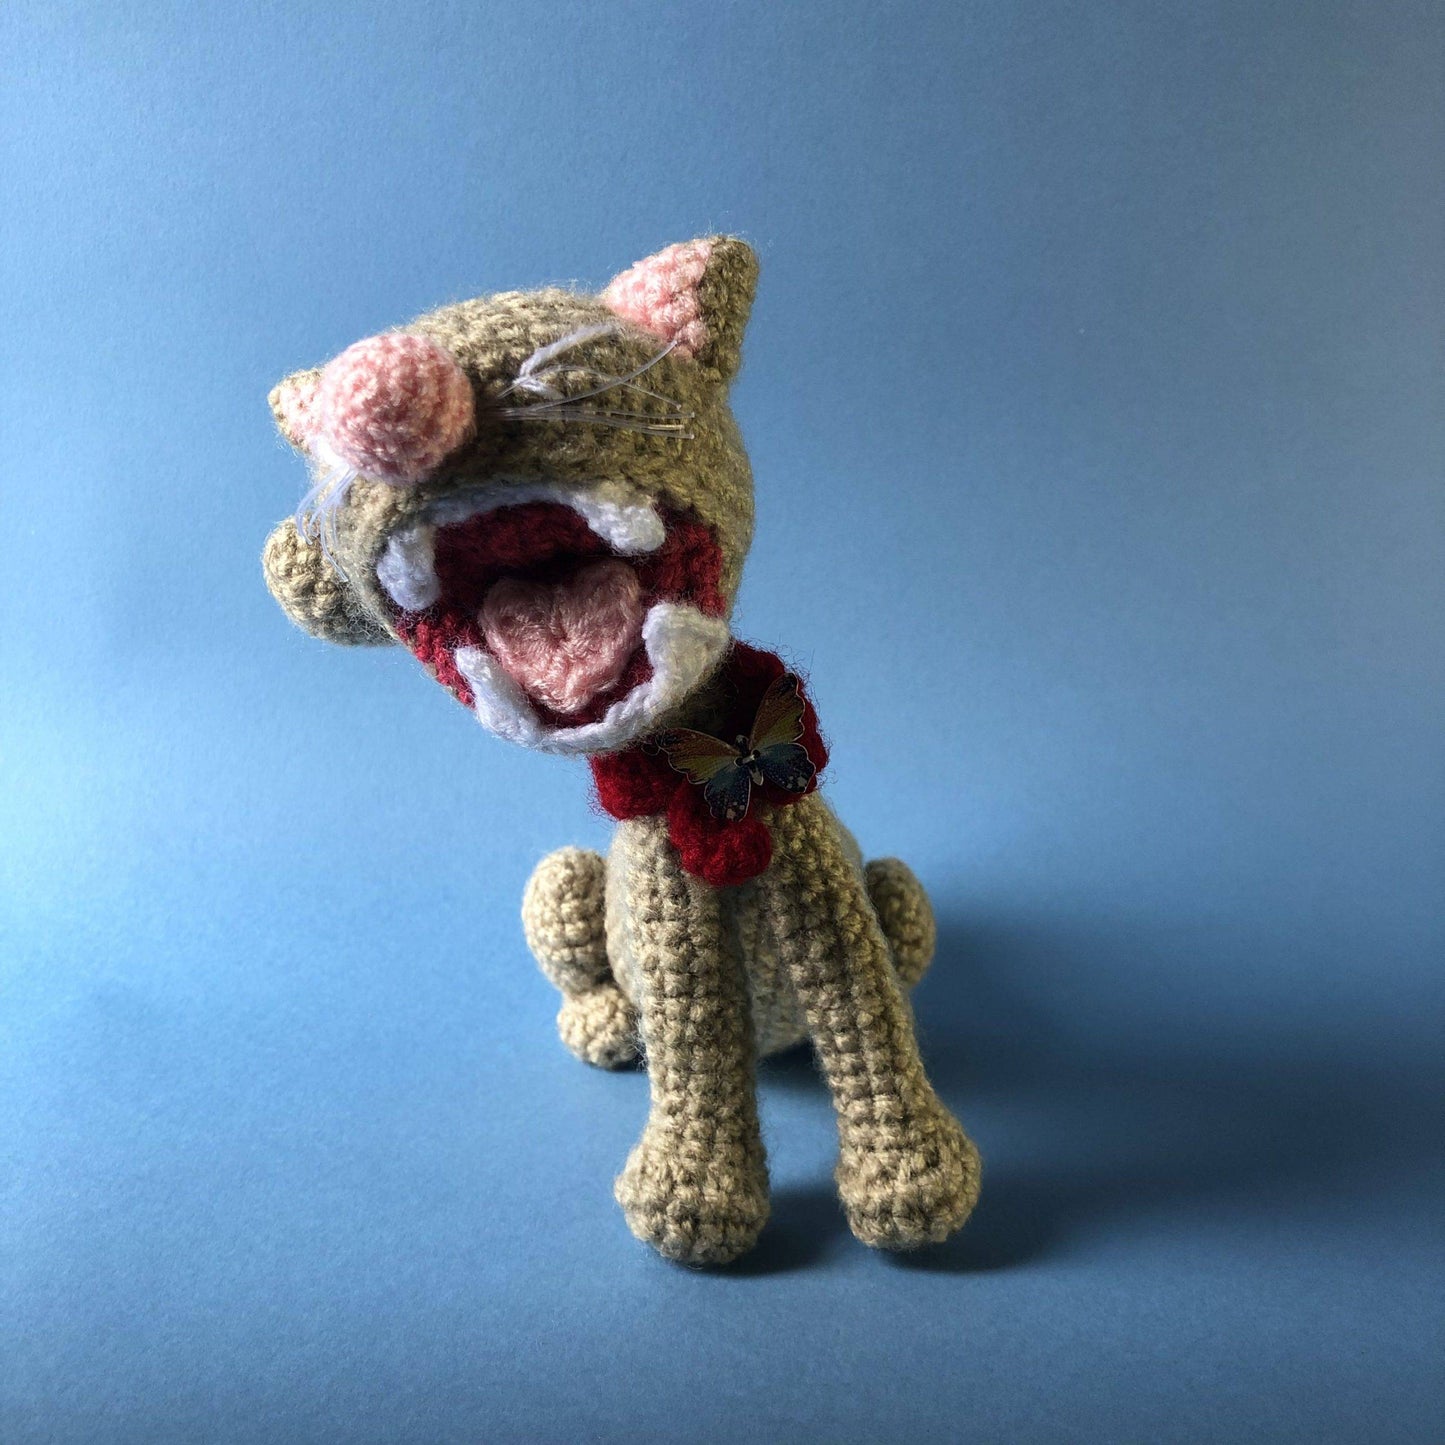 Magical Beings - Yawning Midori Cat Crochet Toy